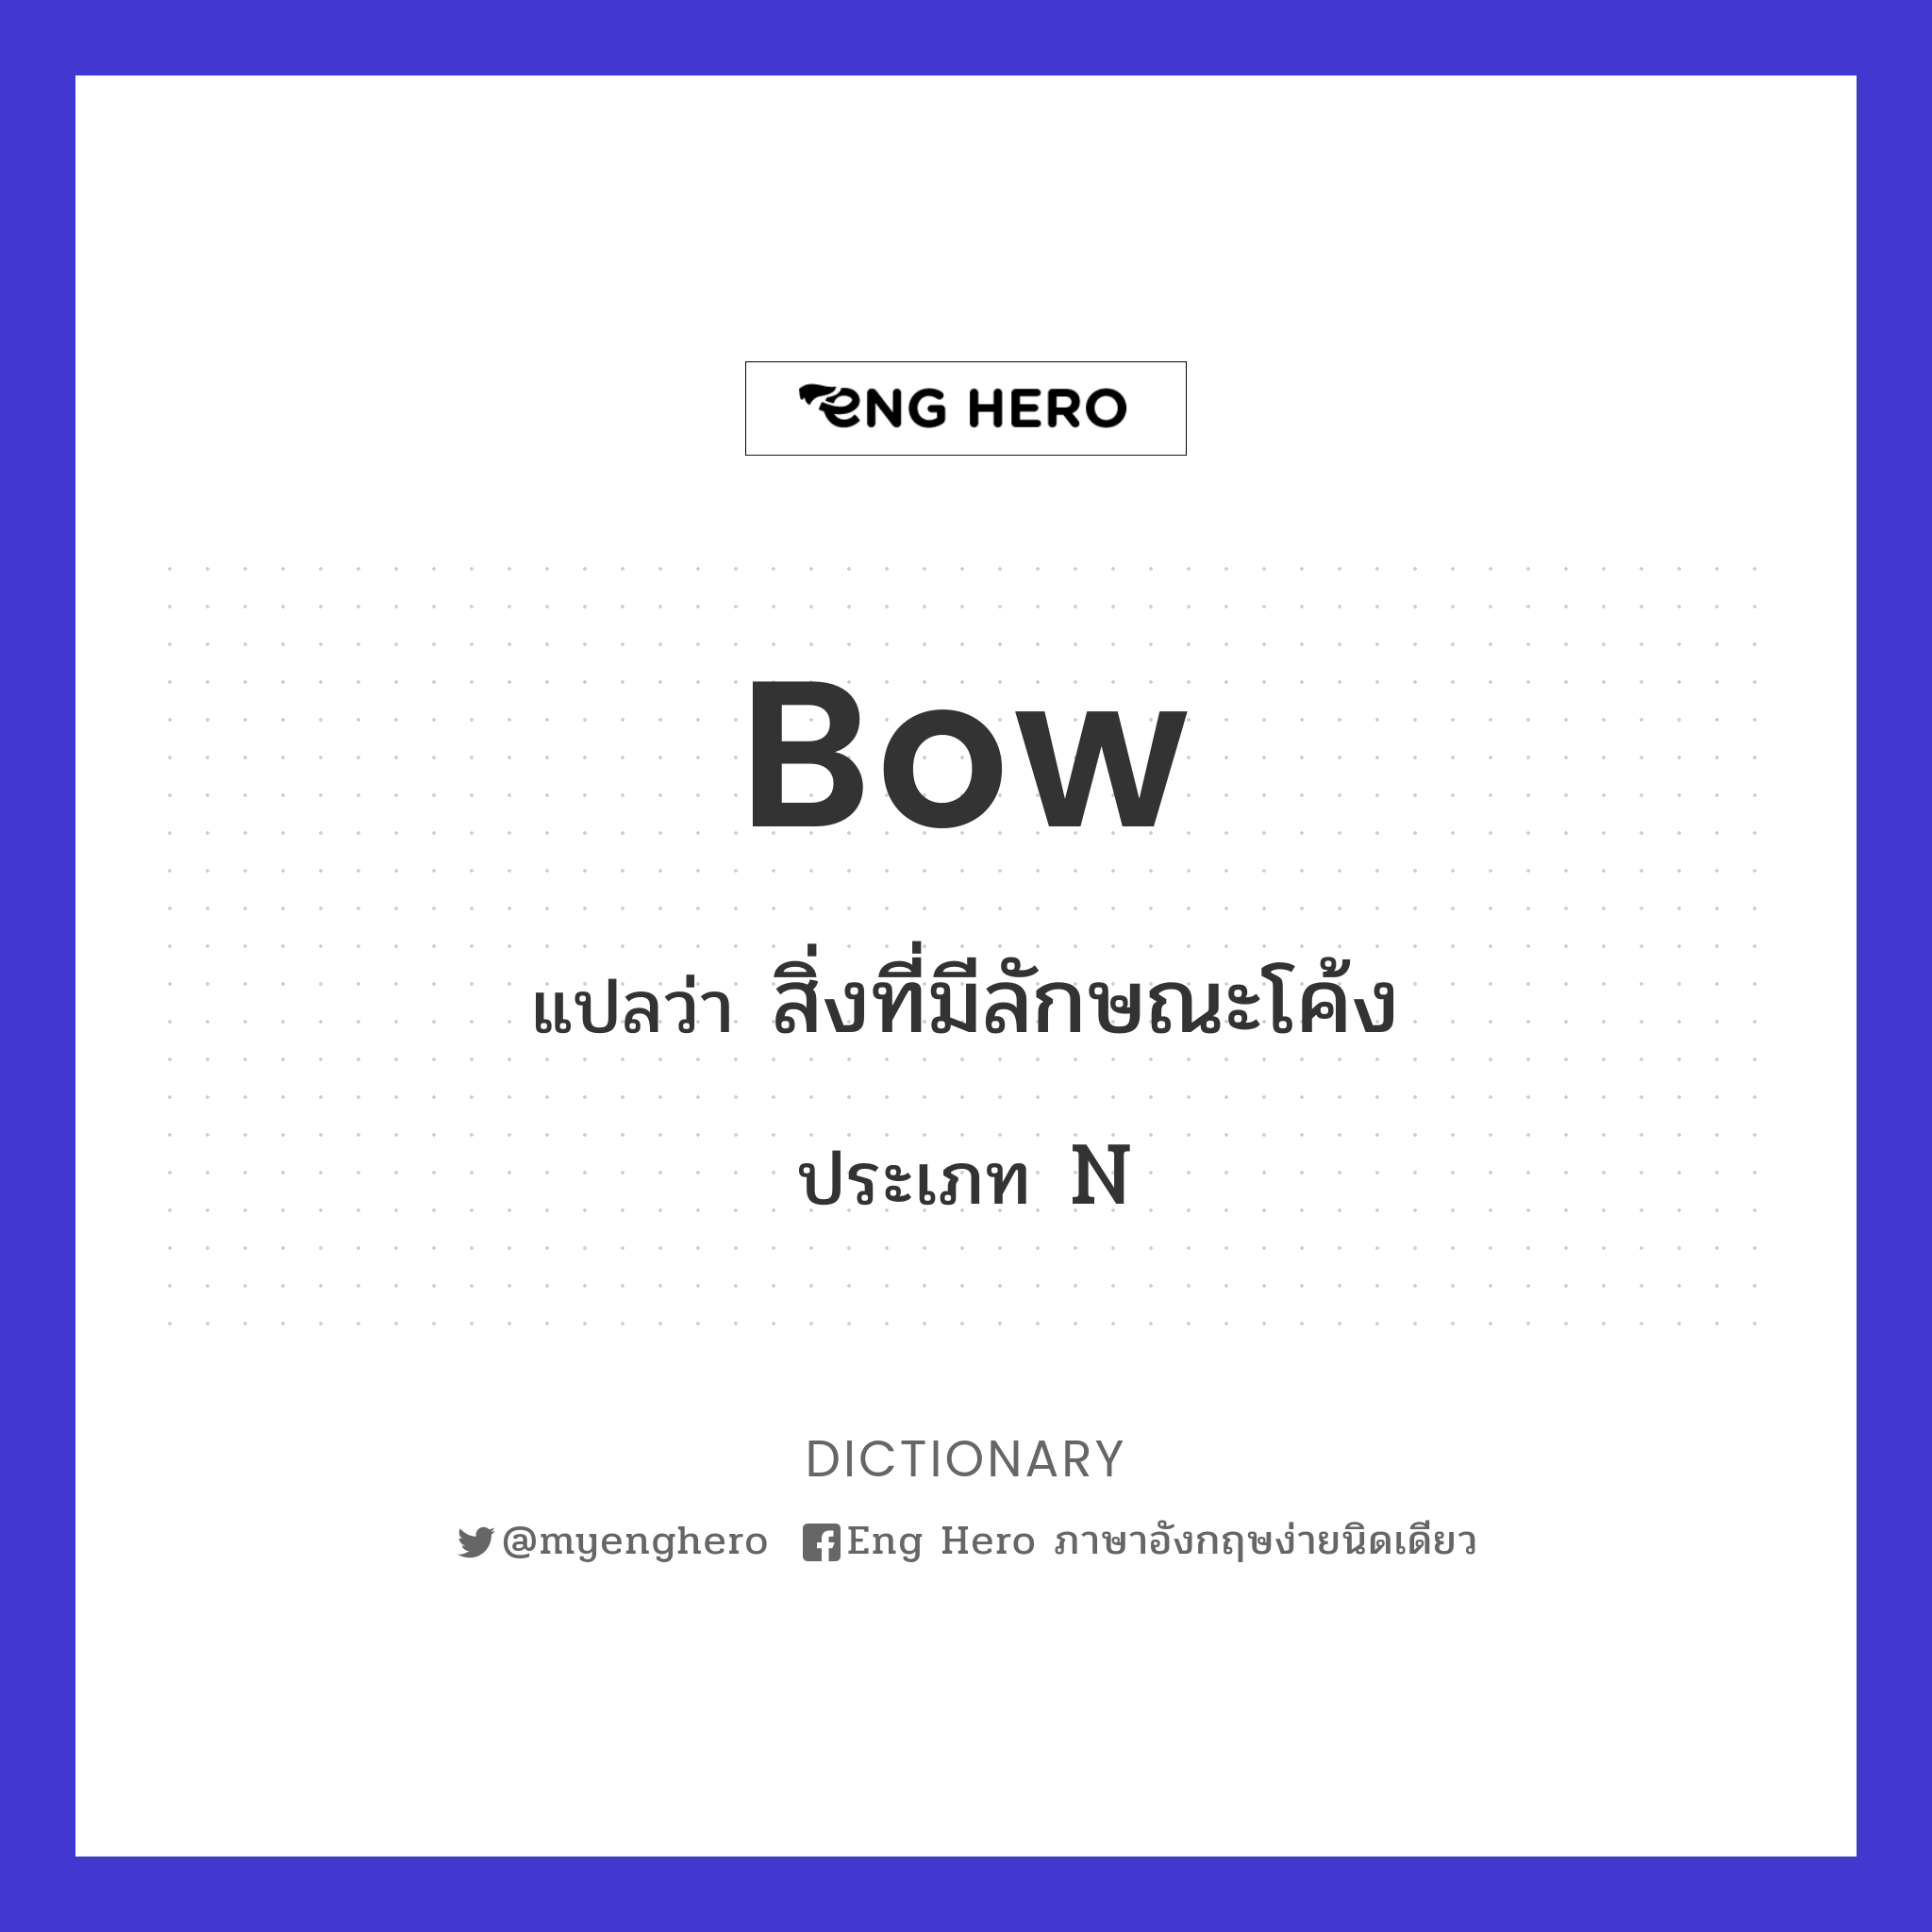 bow